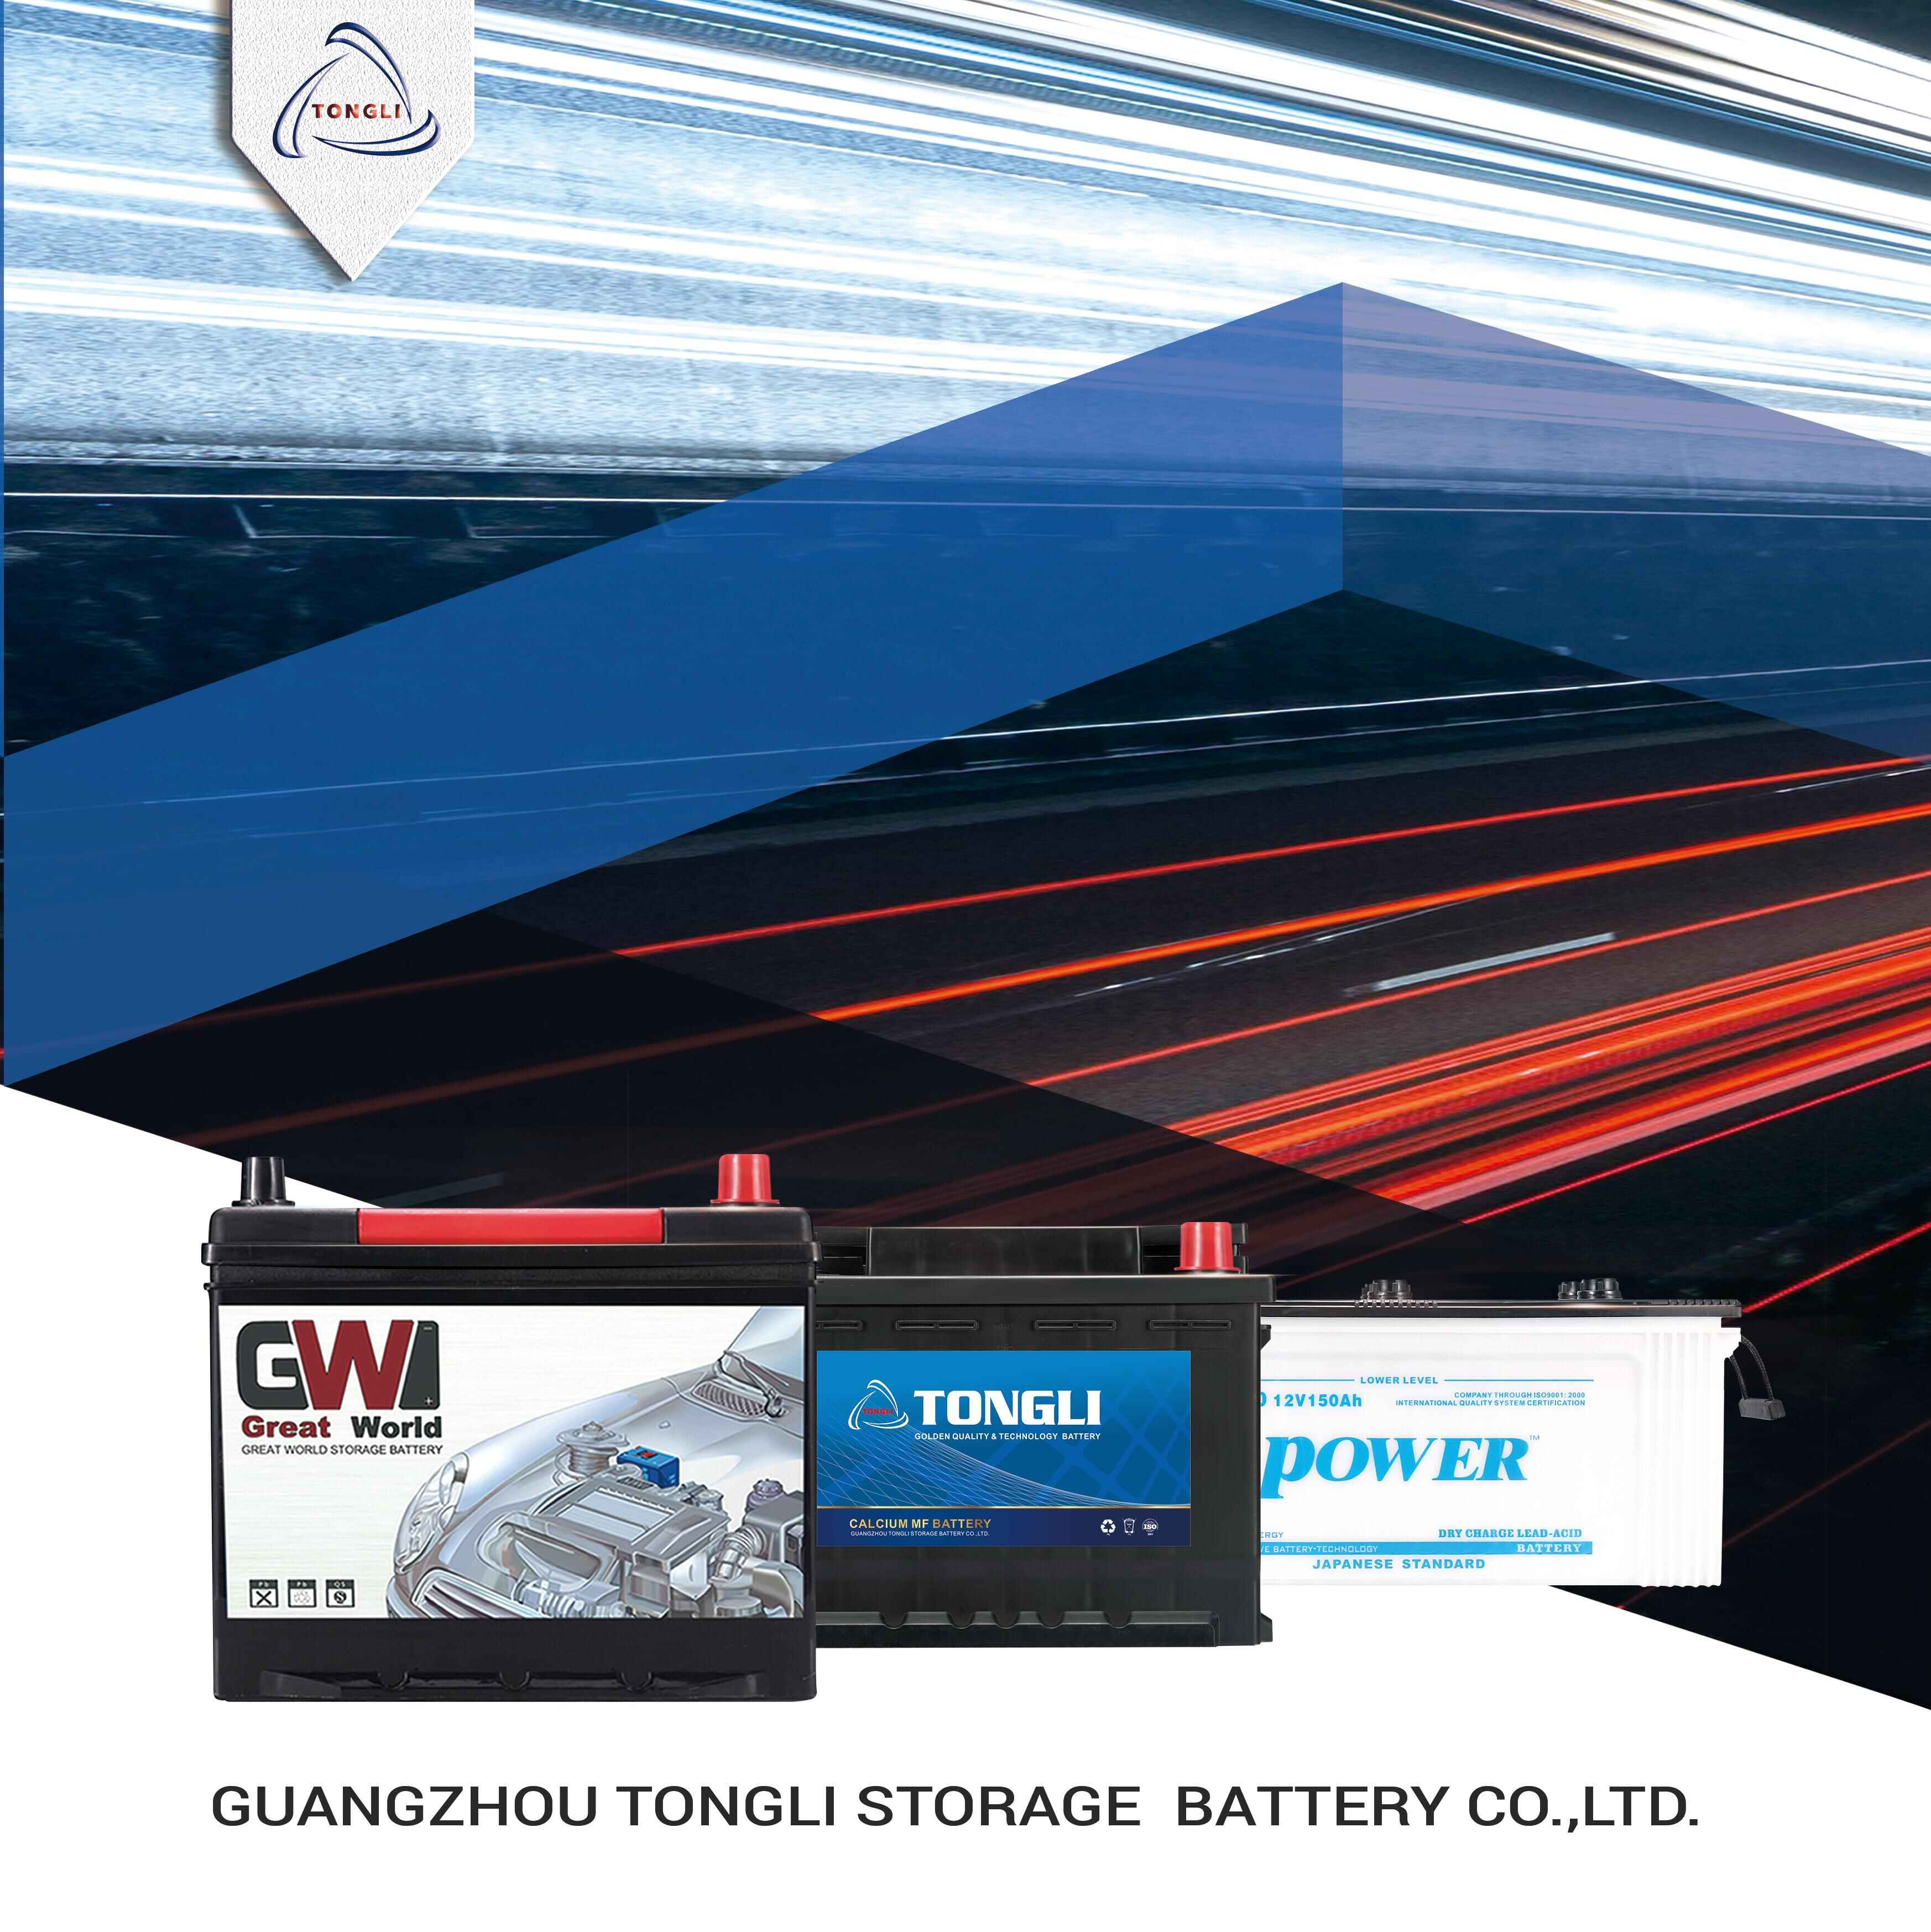 GW Brand Car Battery 12V 54Ah Maintenance Free Starter Stop Battery